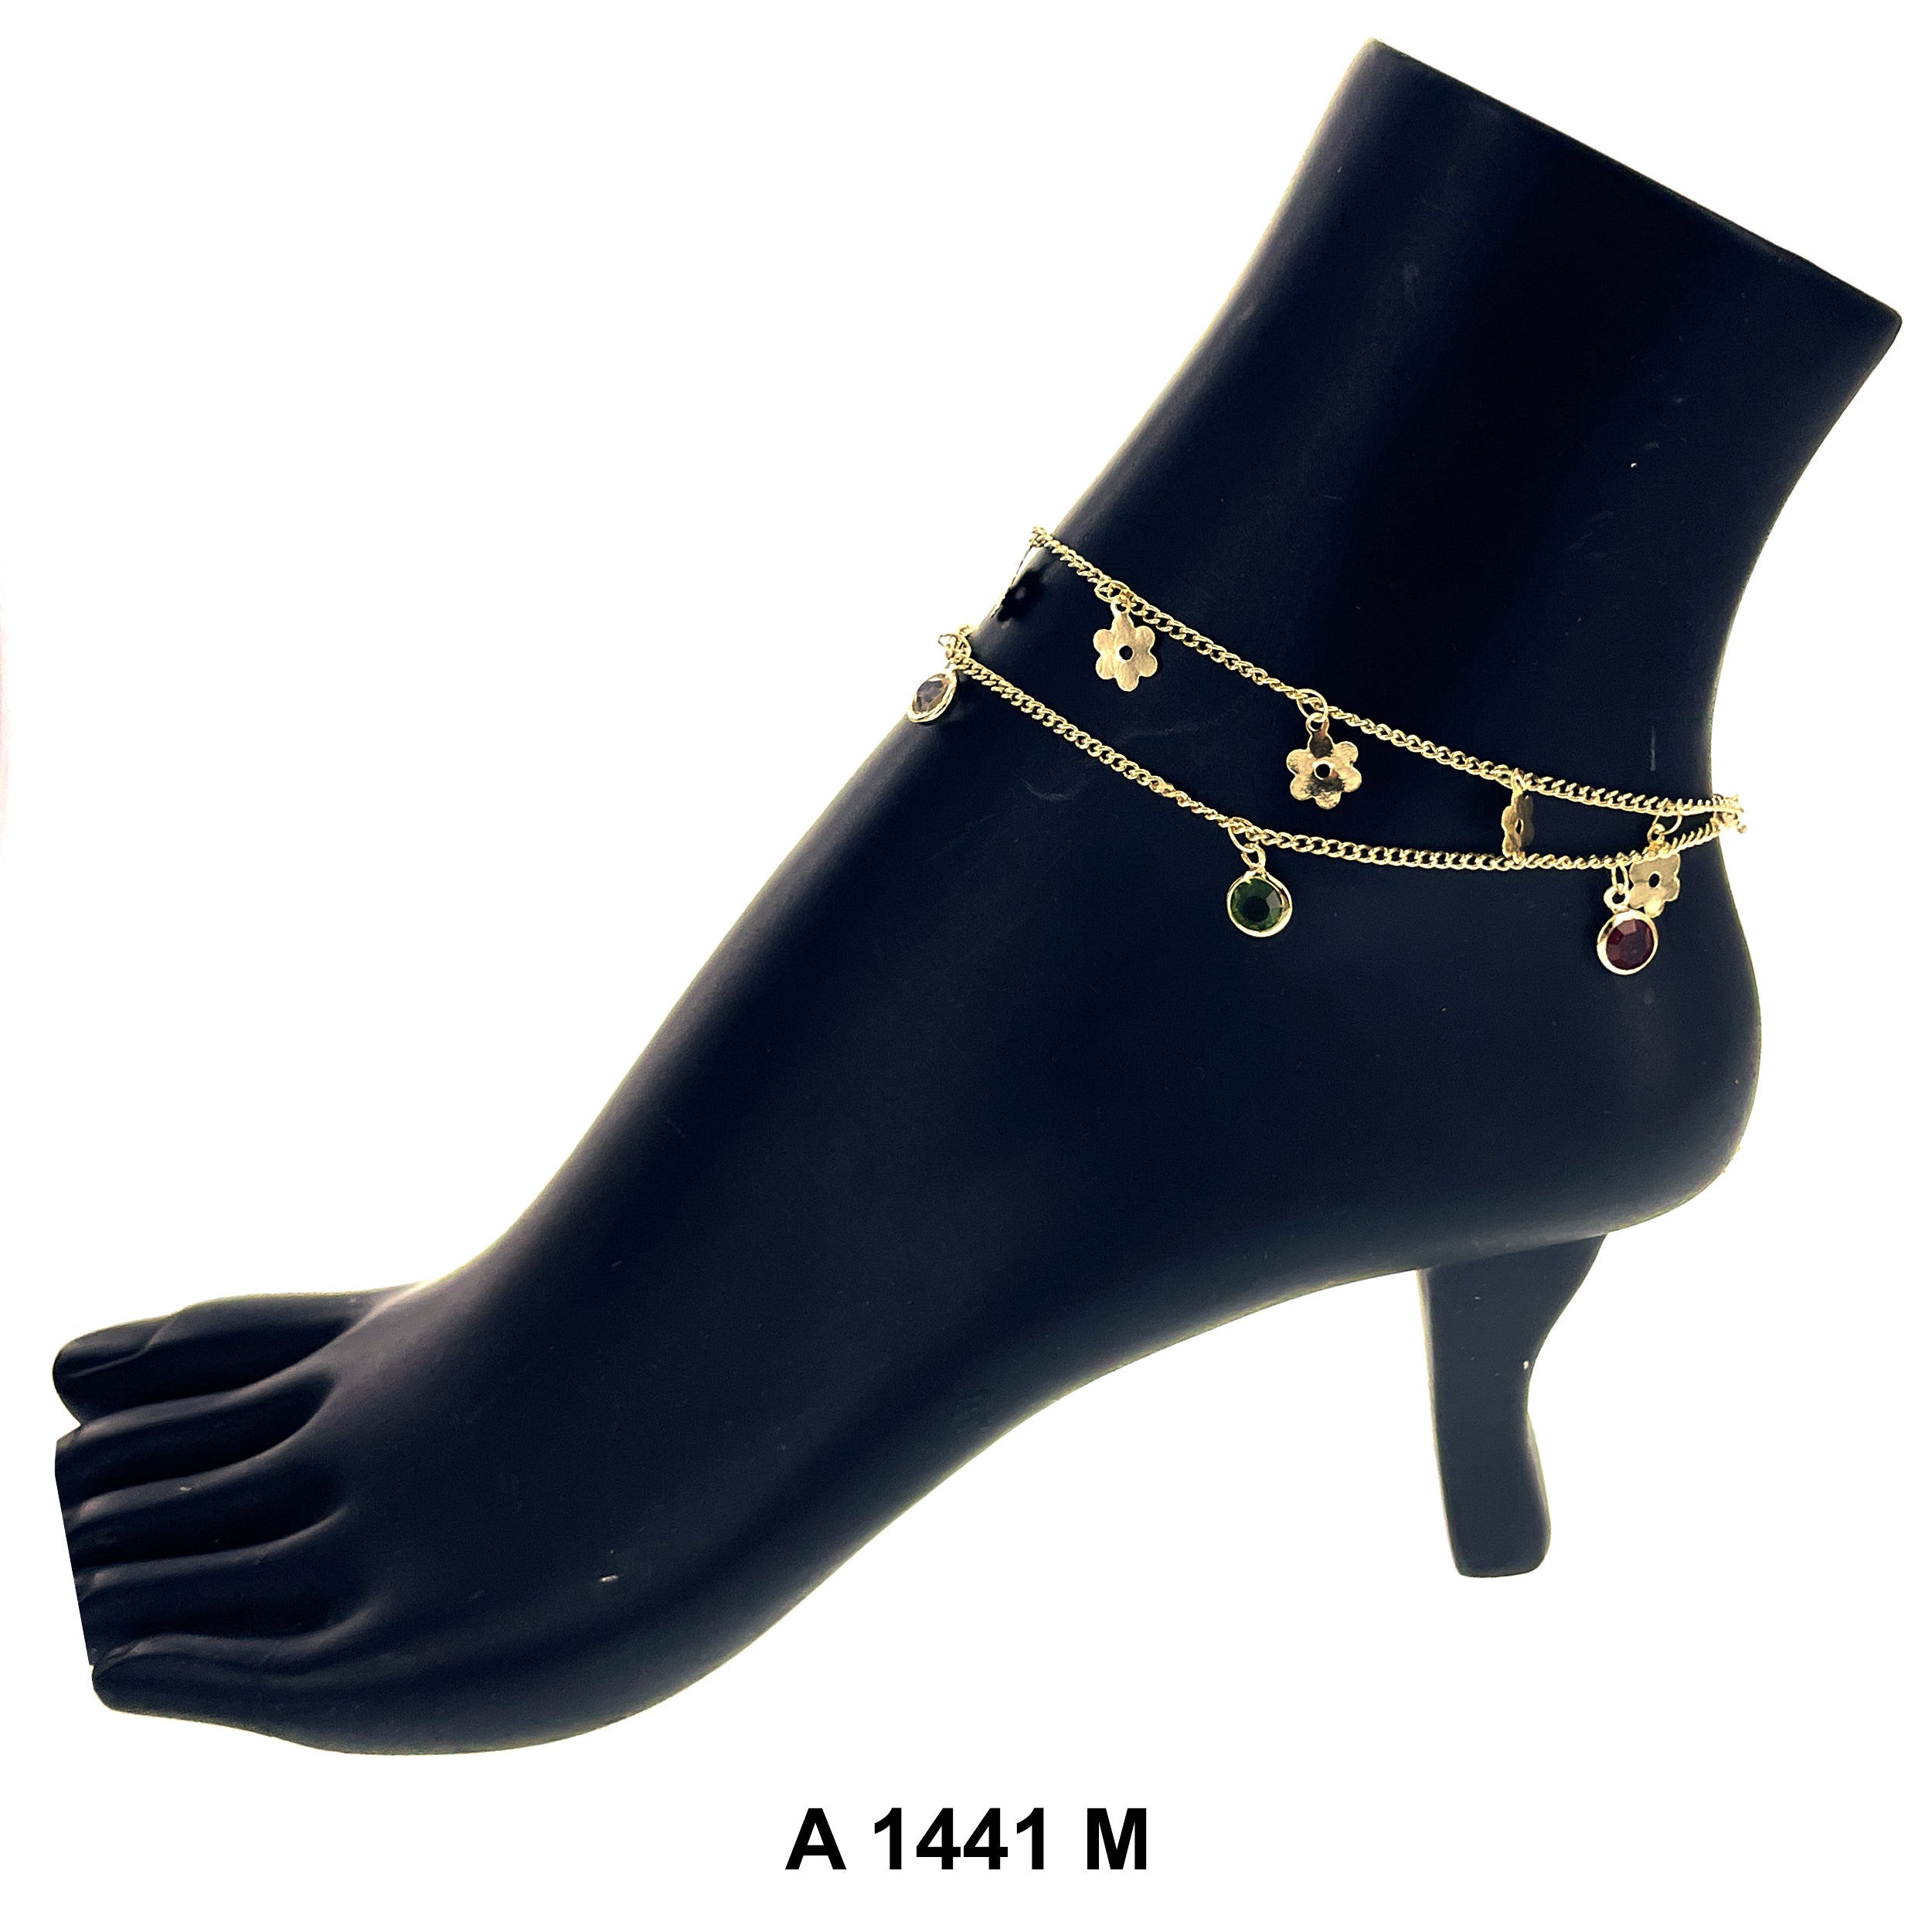 Fashion Anklets A 1441 M